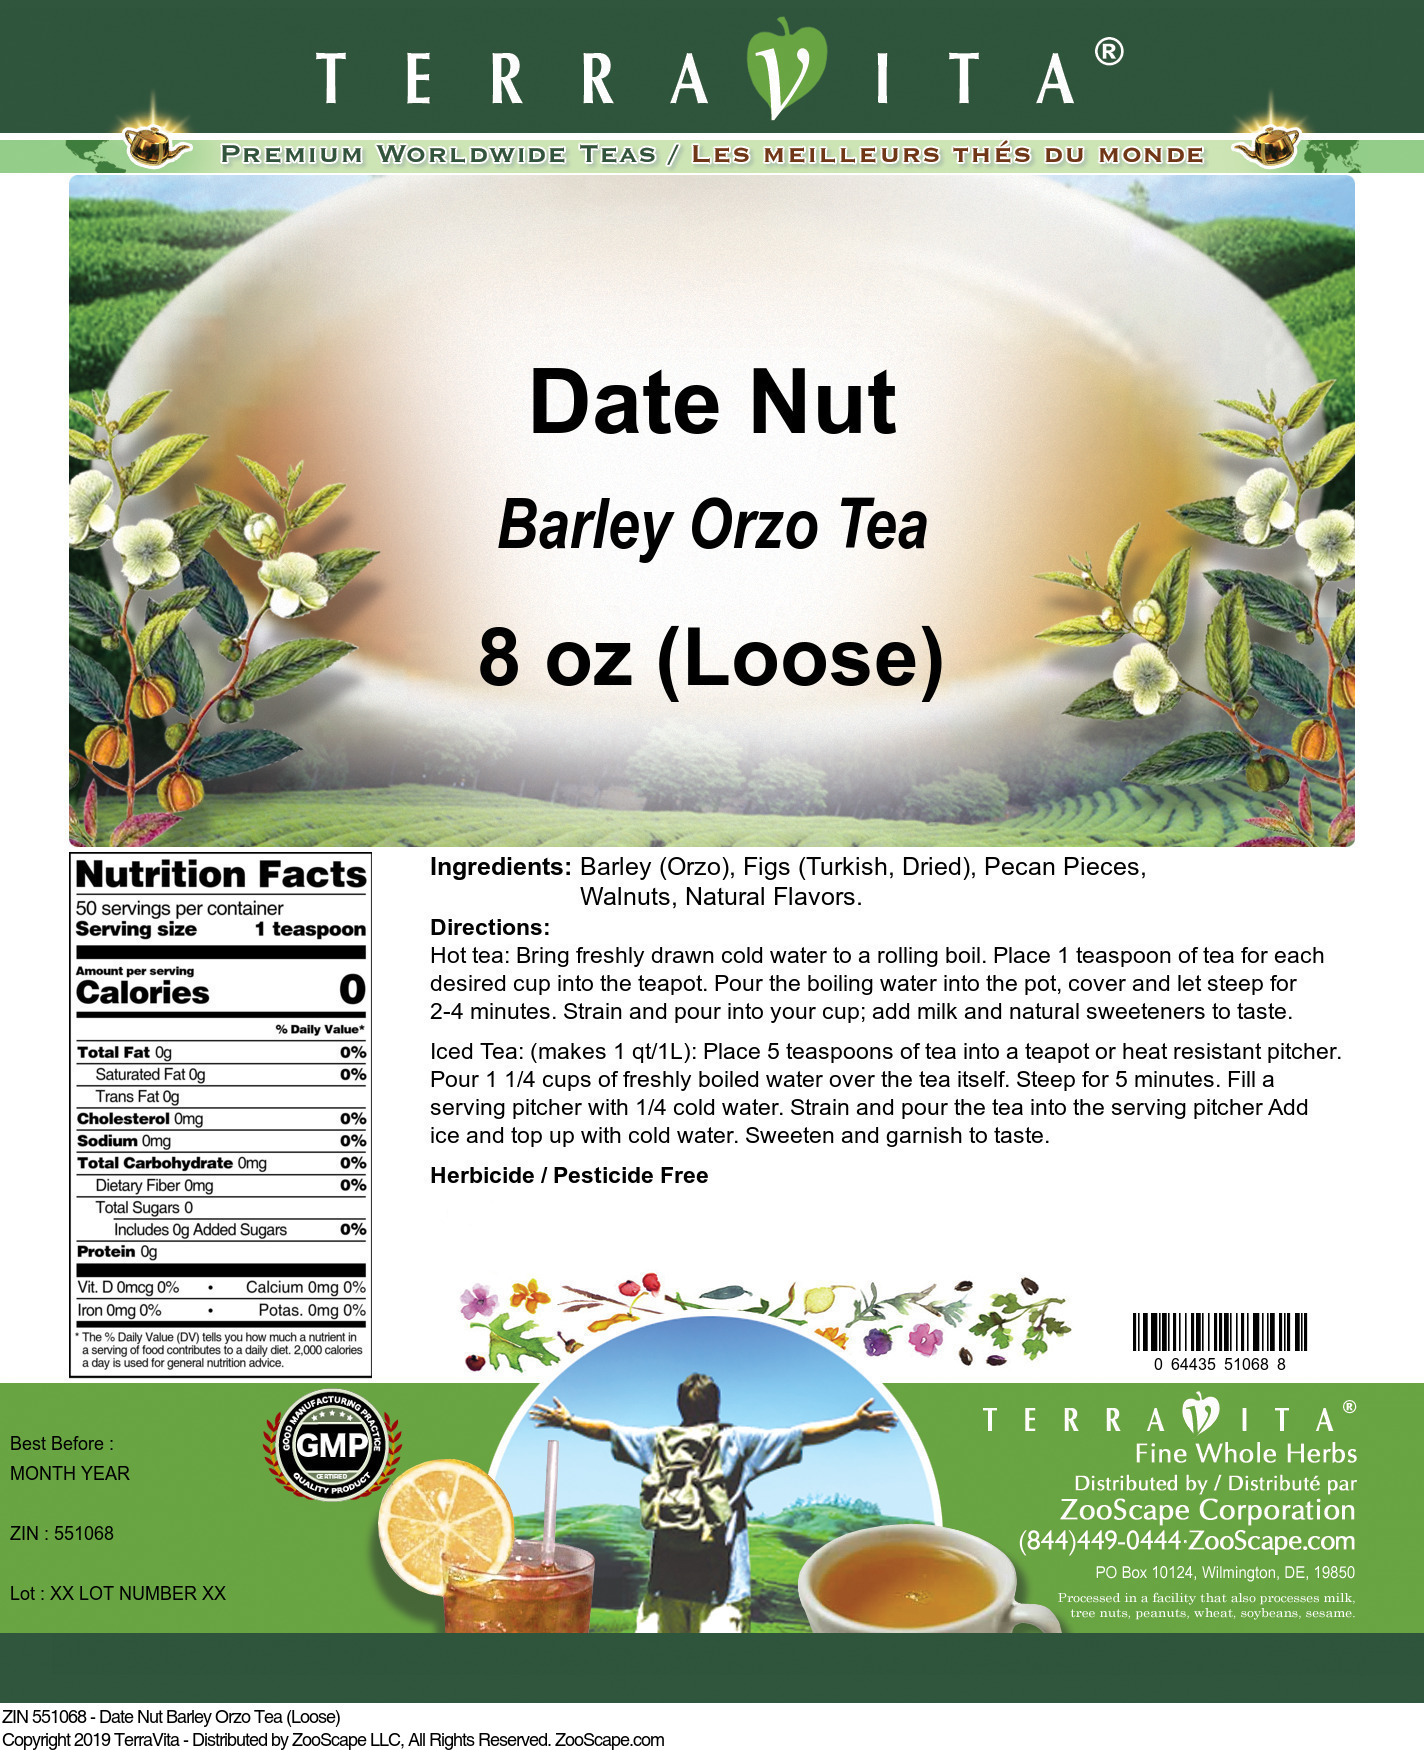 Date Nut Barley Orzo Tea (Loose) - Label